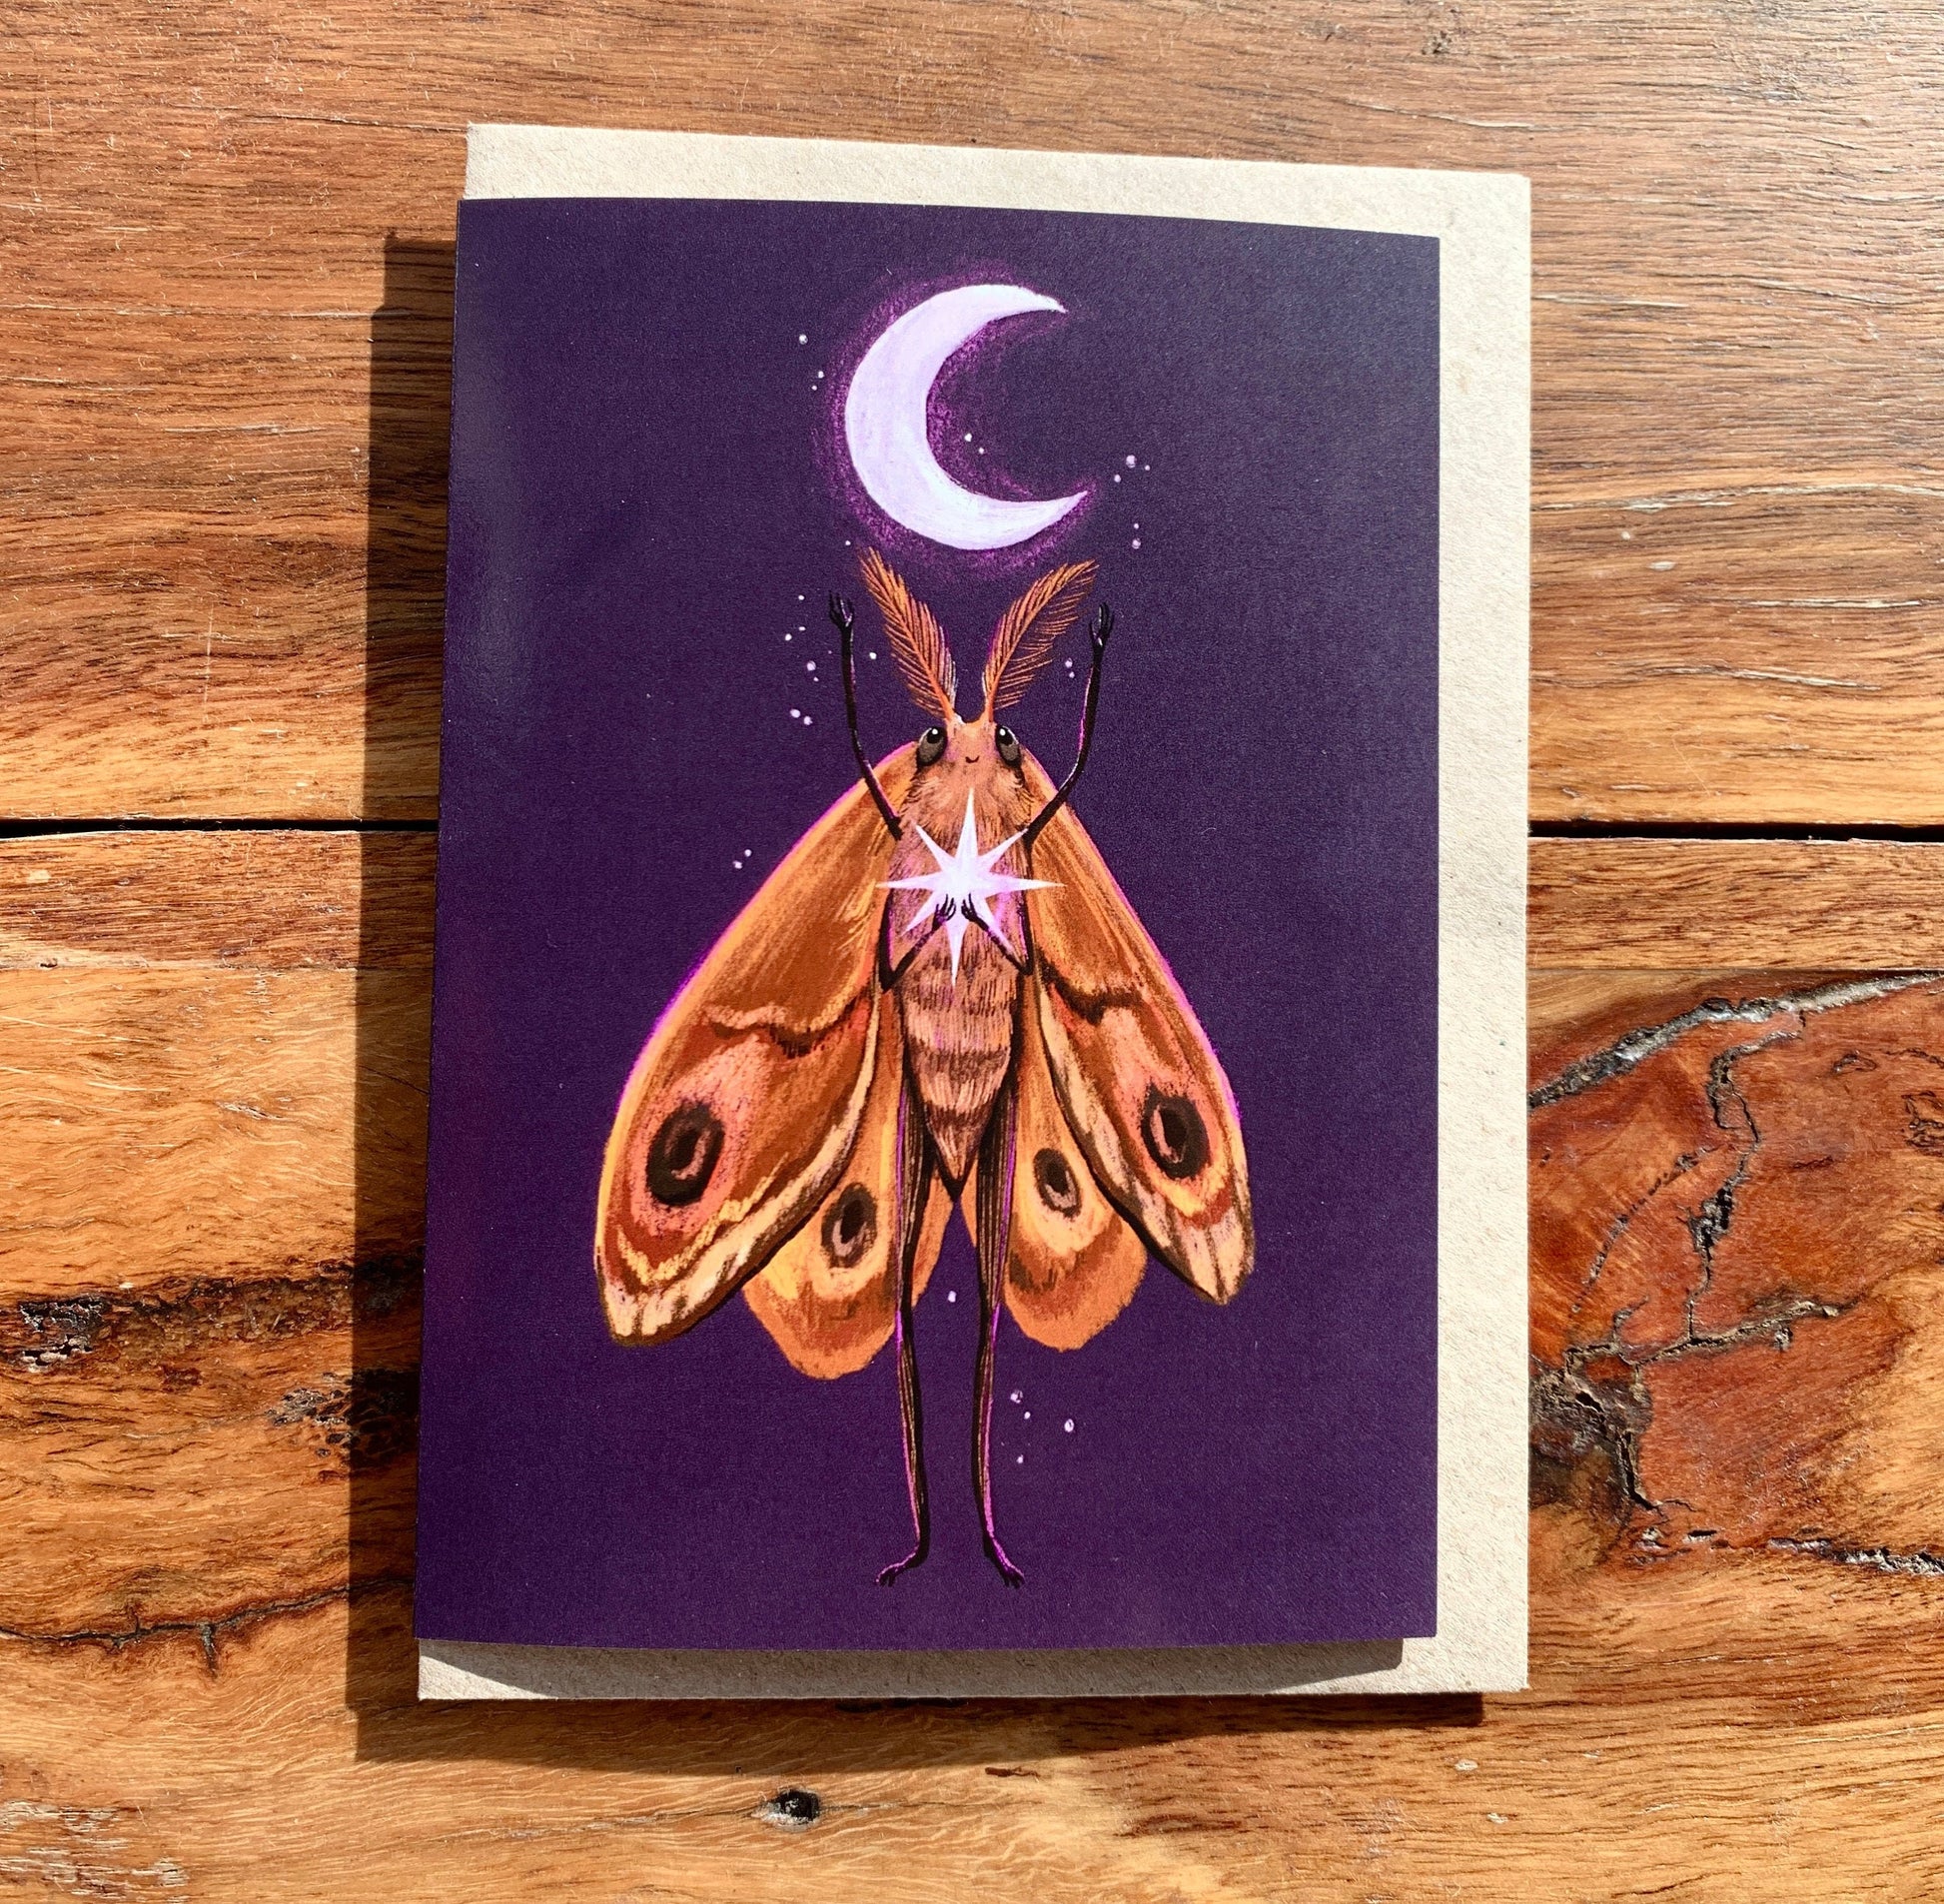 Anna Seed Art | Greeting Card - Moth's Dream. Cute illustration